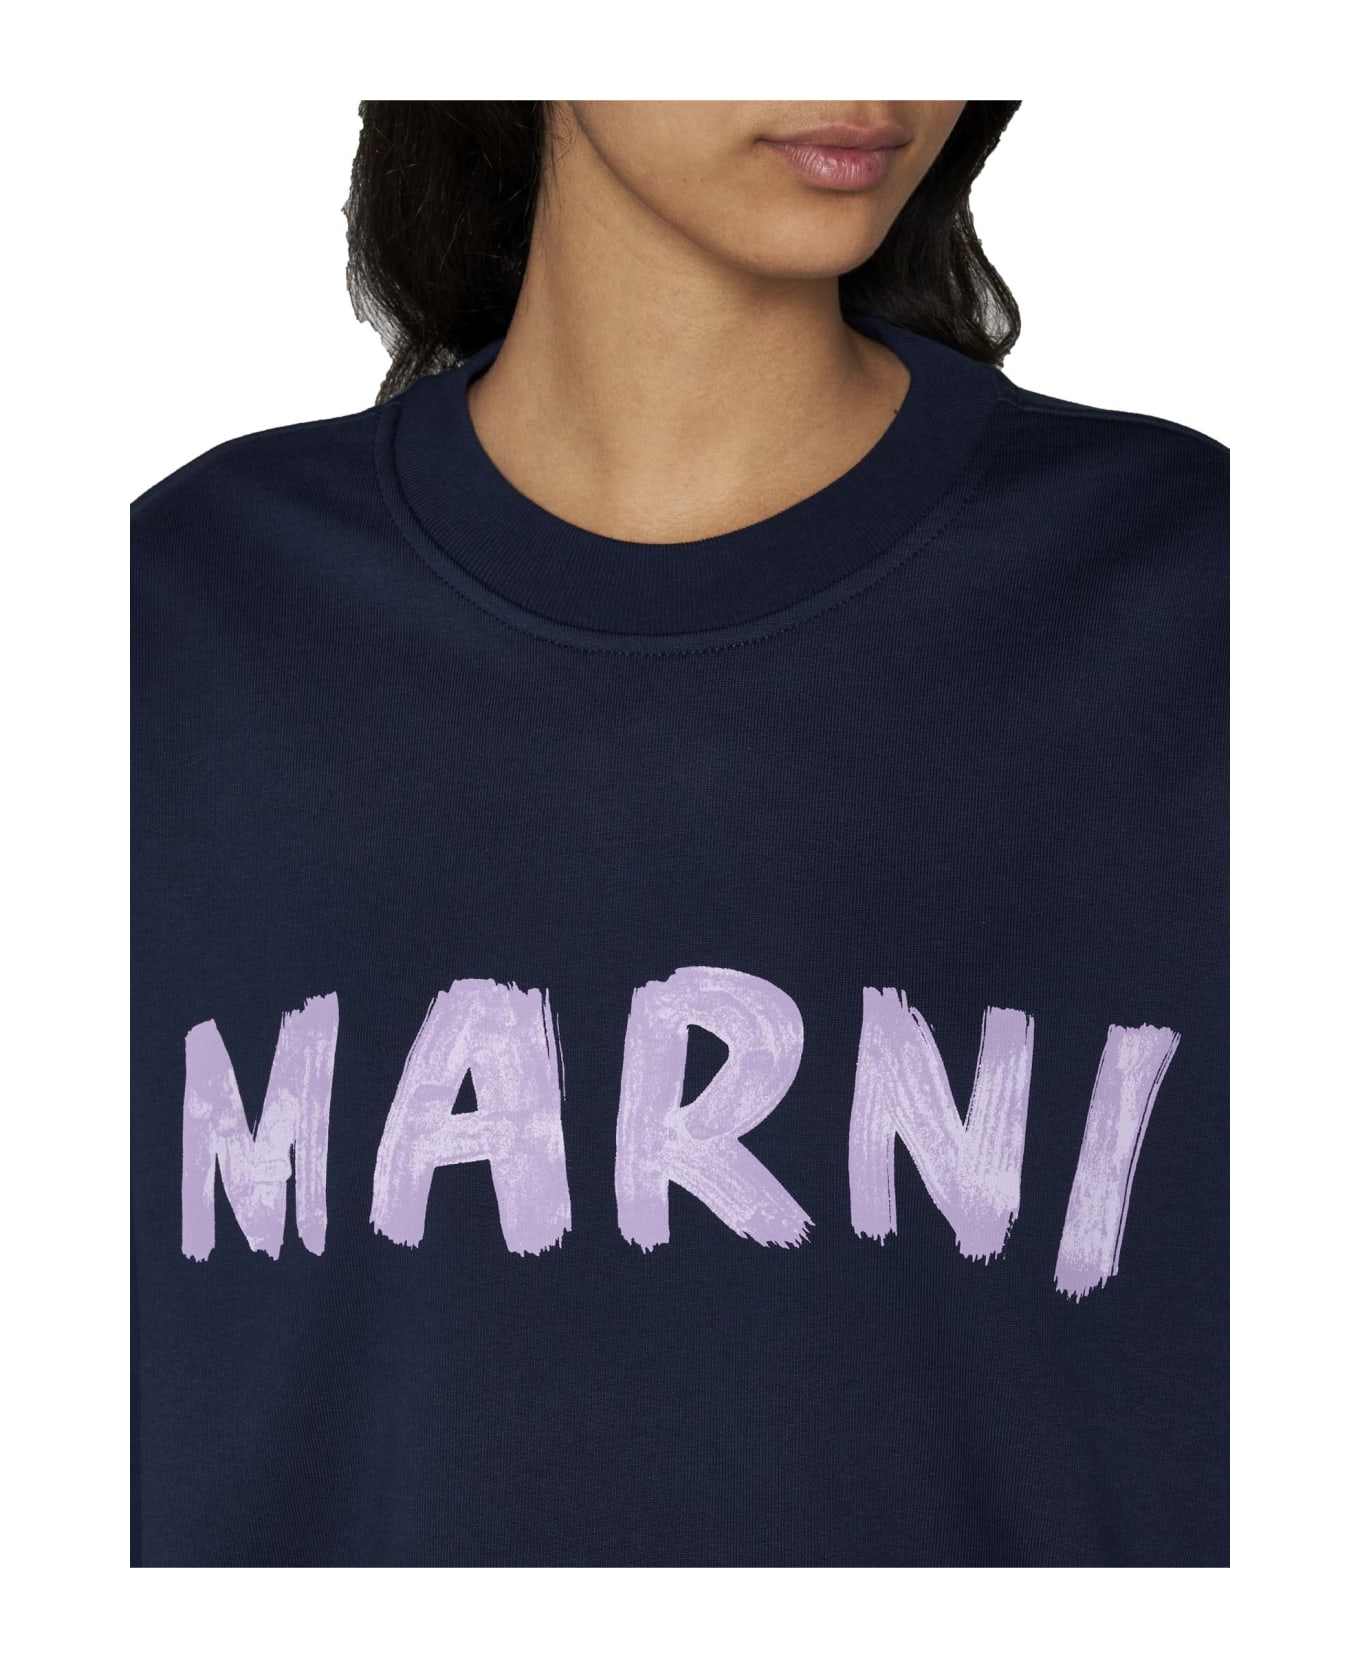 Marni Sweater - Blue kynite